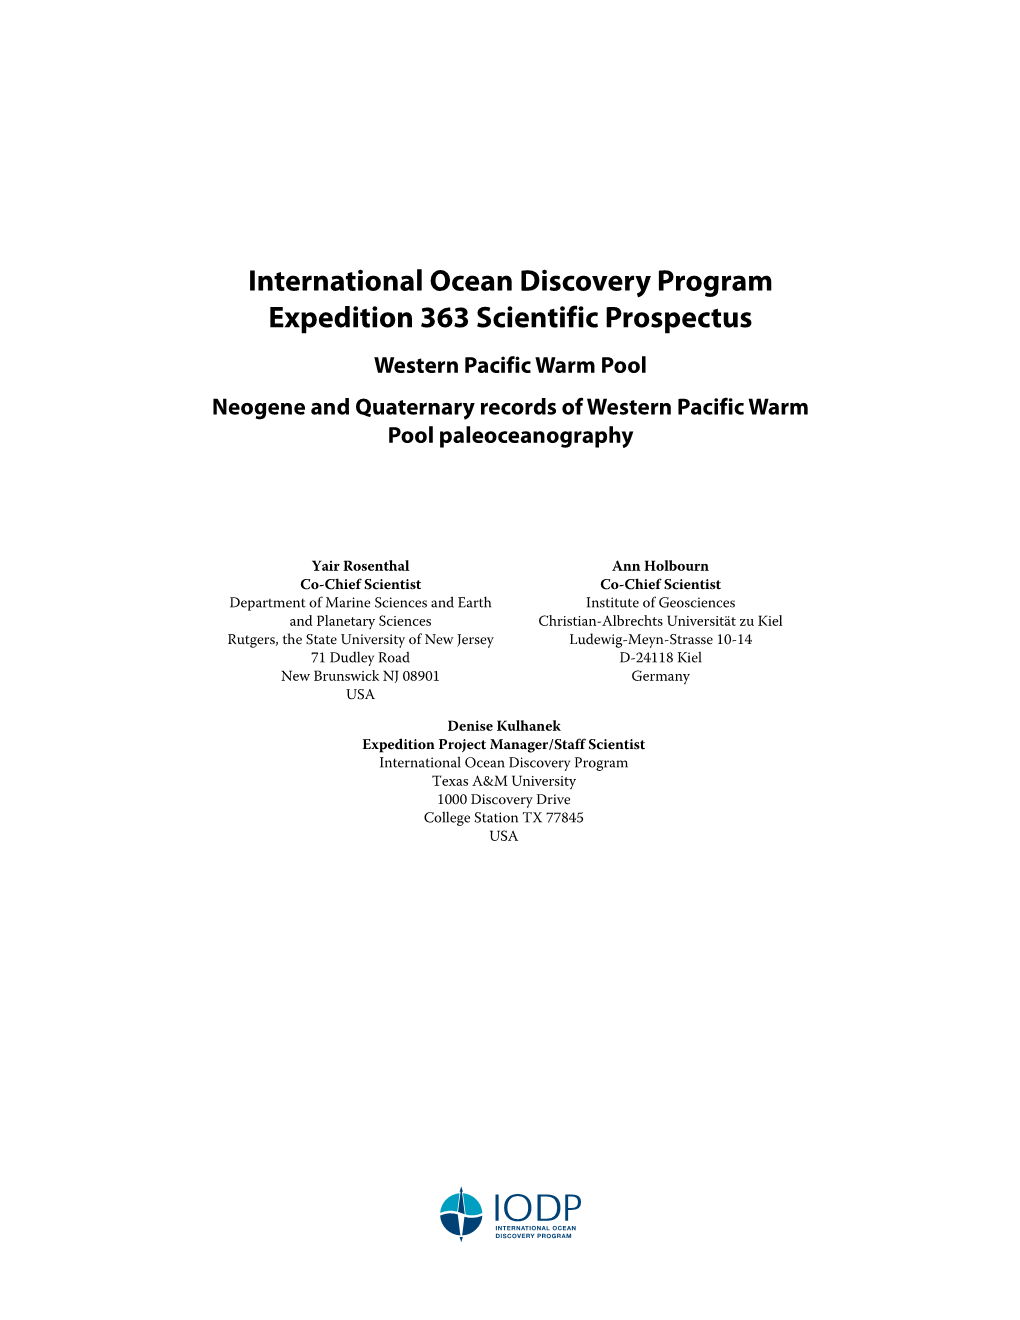 International Ocean Discovery Program Expedition 363